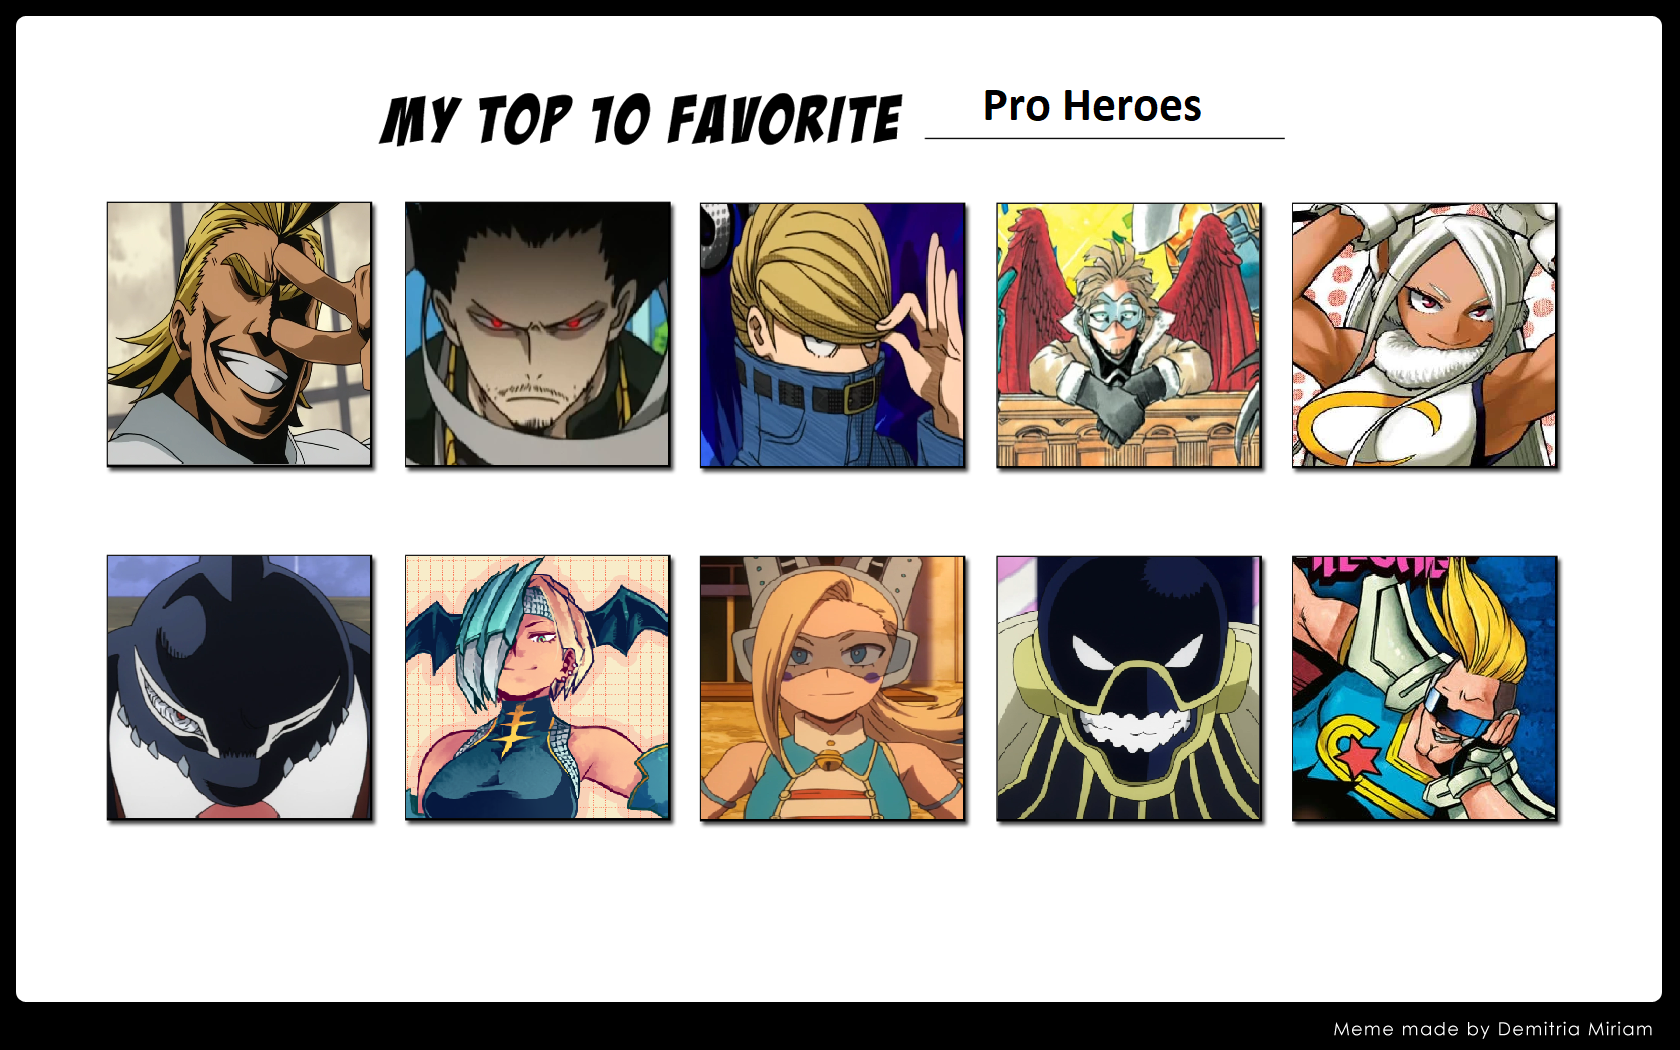 My Hero Academia: Who Are The Top 10 Pro Heroes? - IMDb